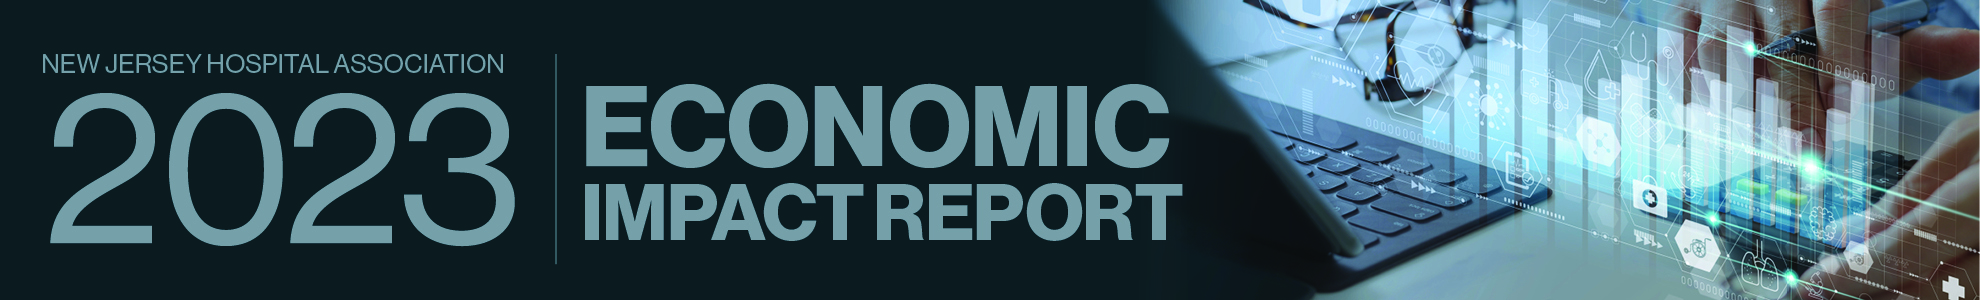 New Jersey Hospital Association: 2023 Economic Impact Report